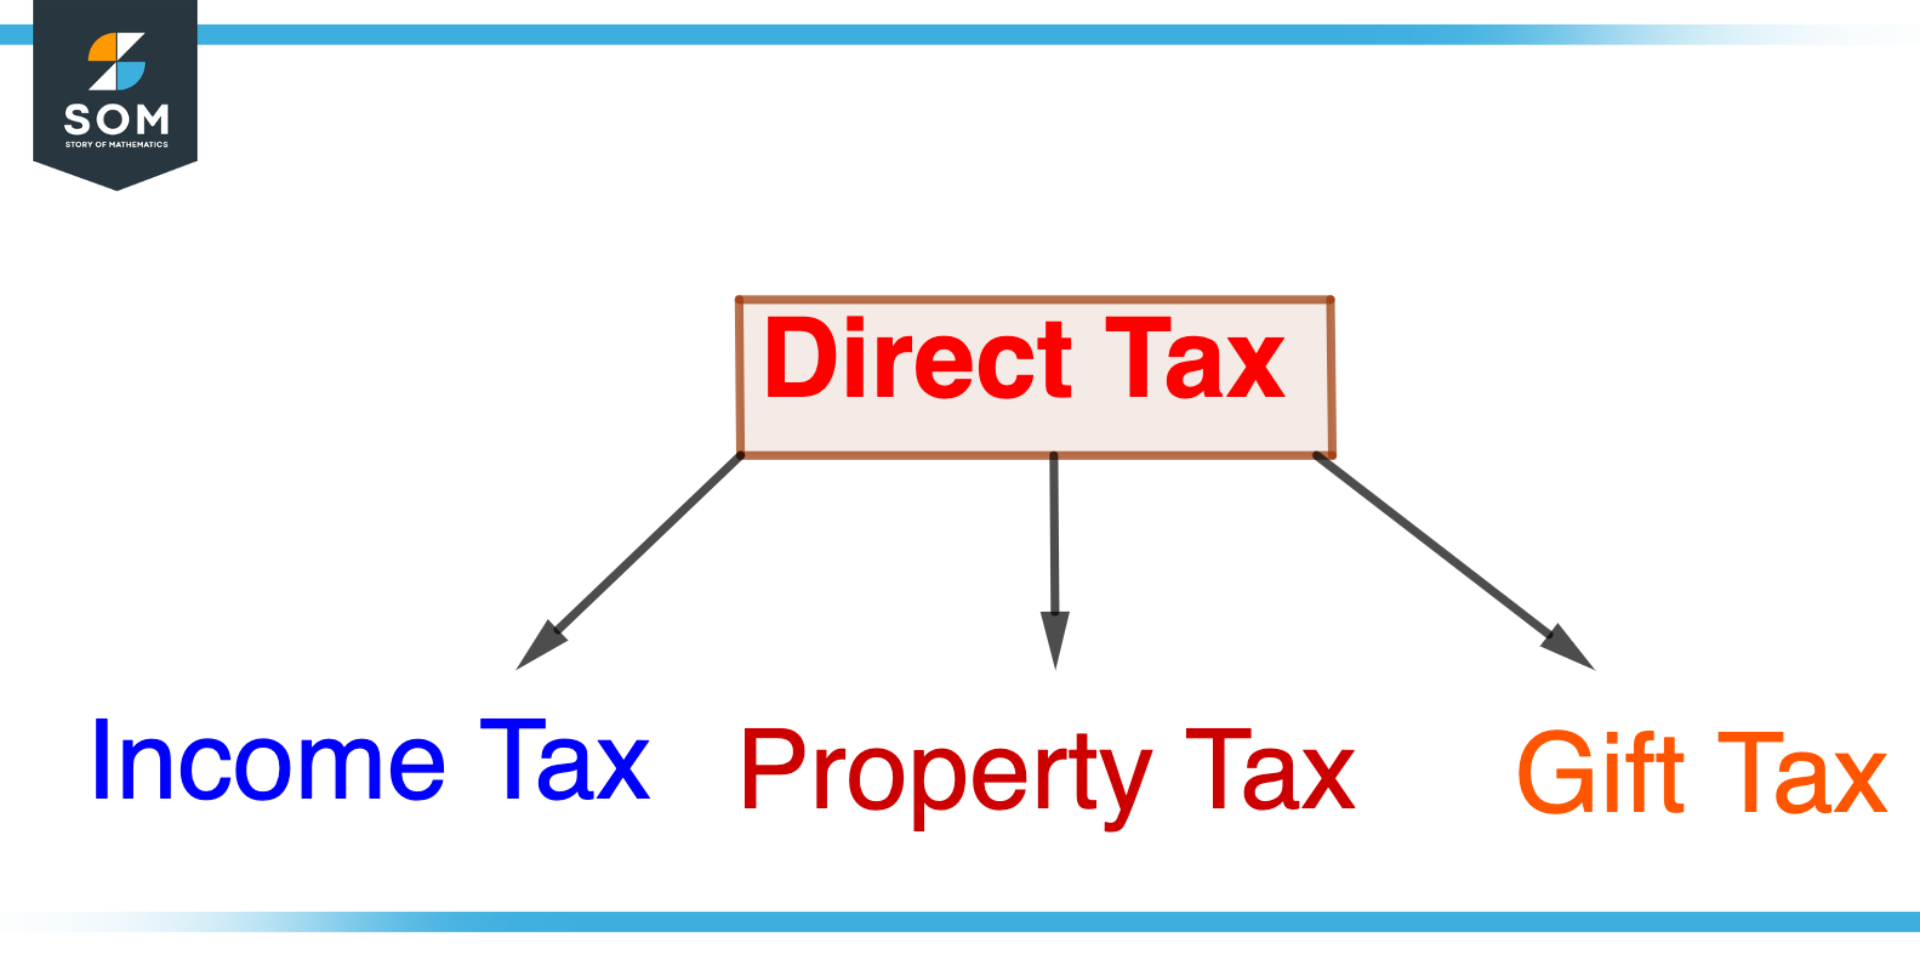 Direct Tax Flowchart